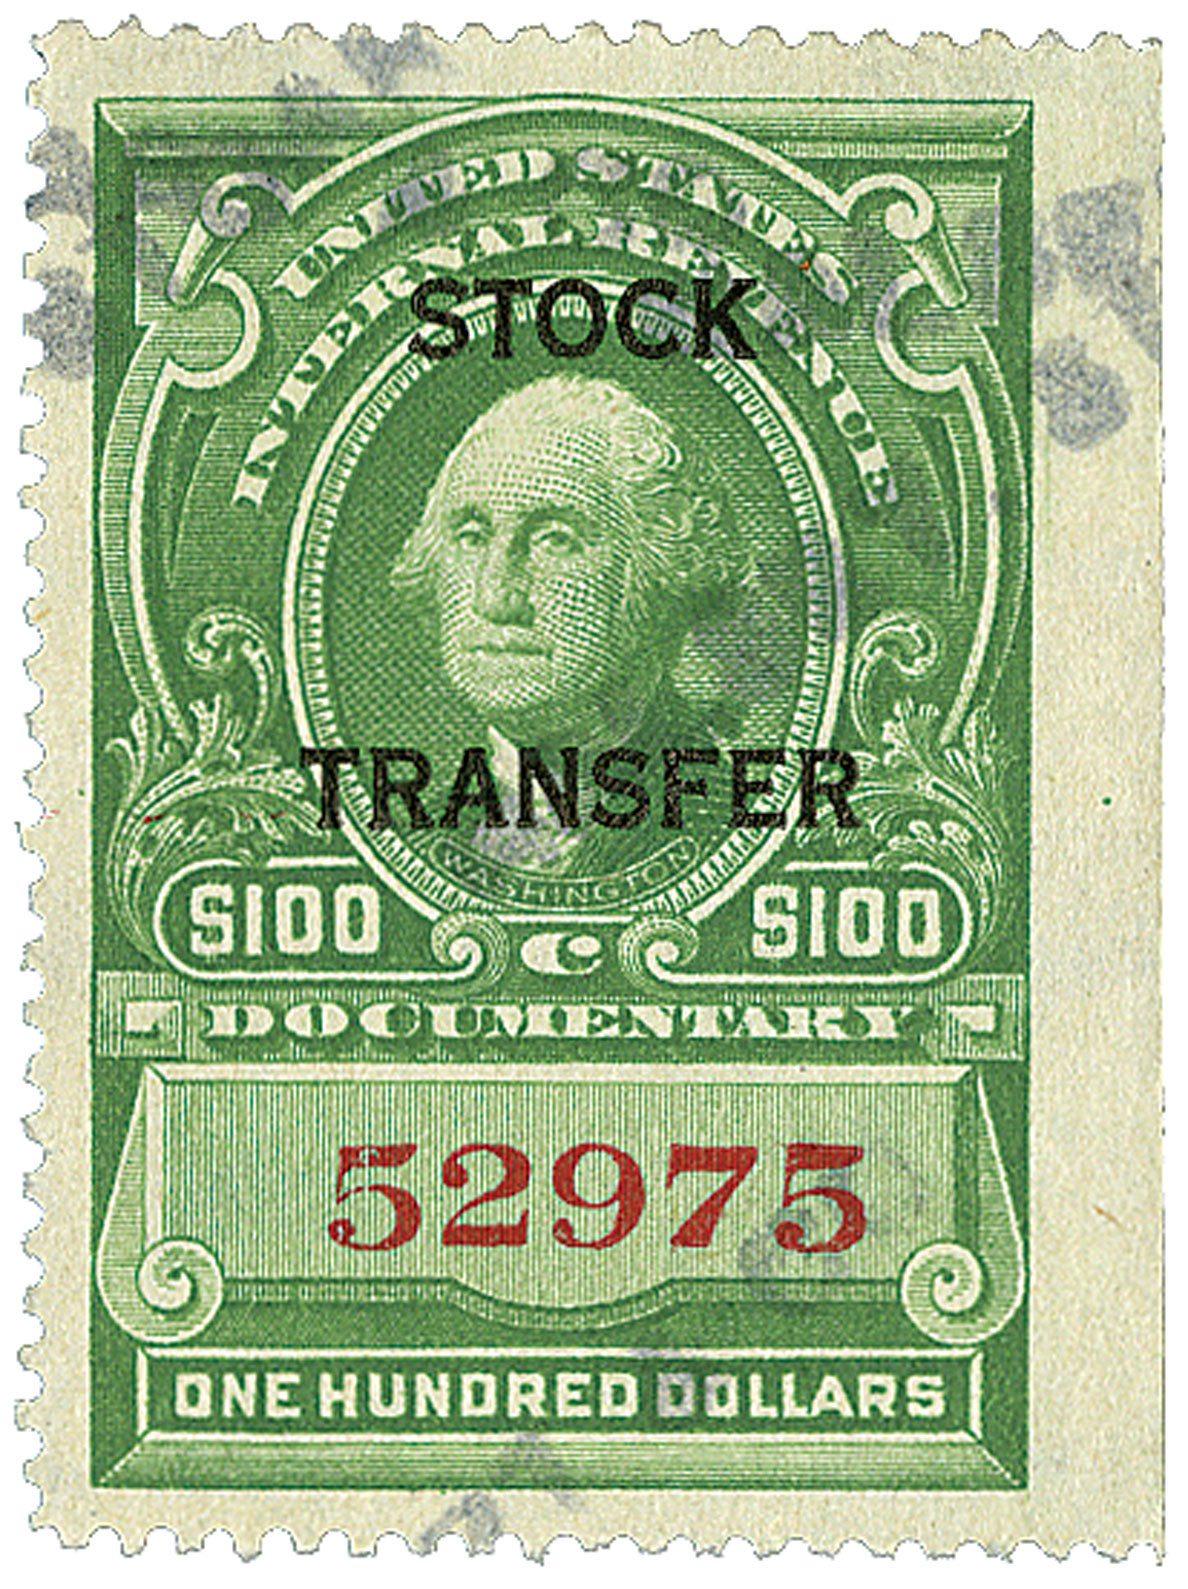 Initial Stock Stamp